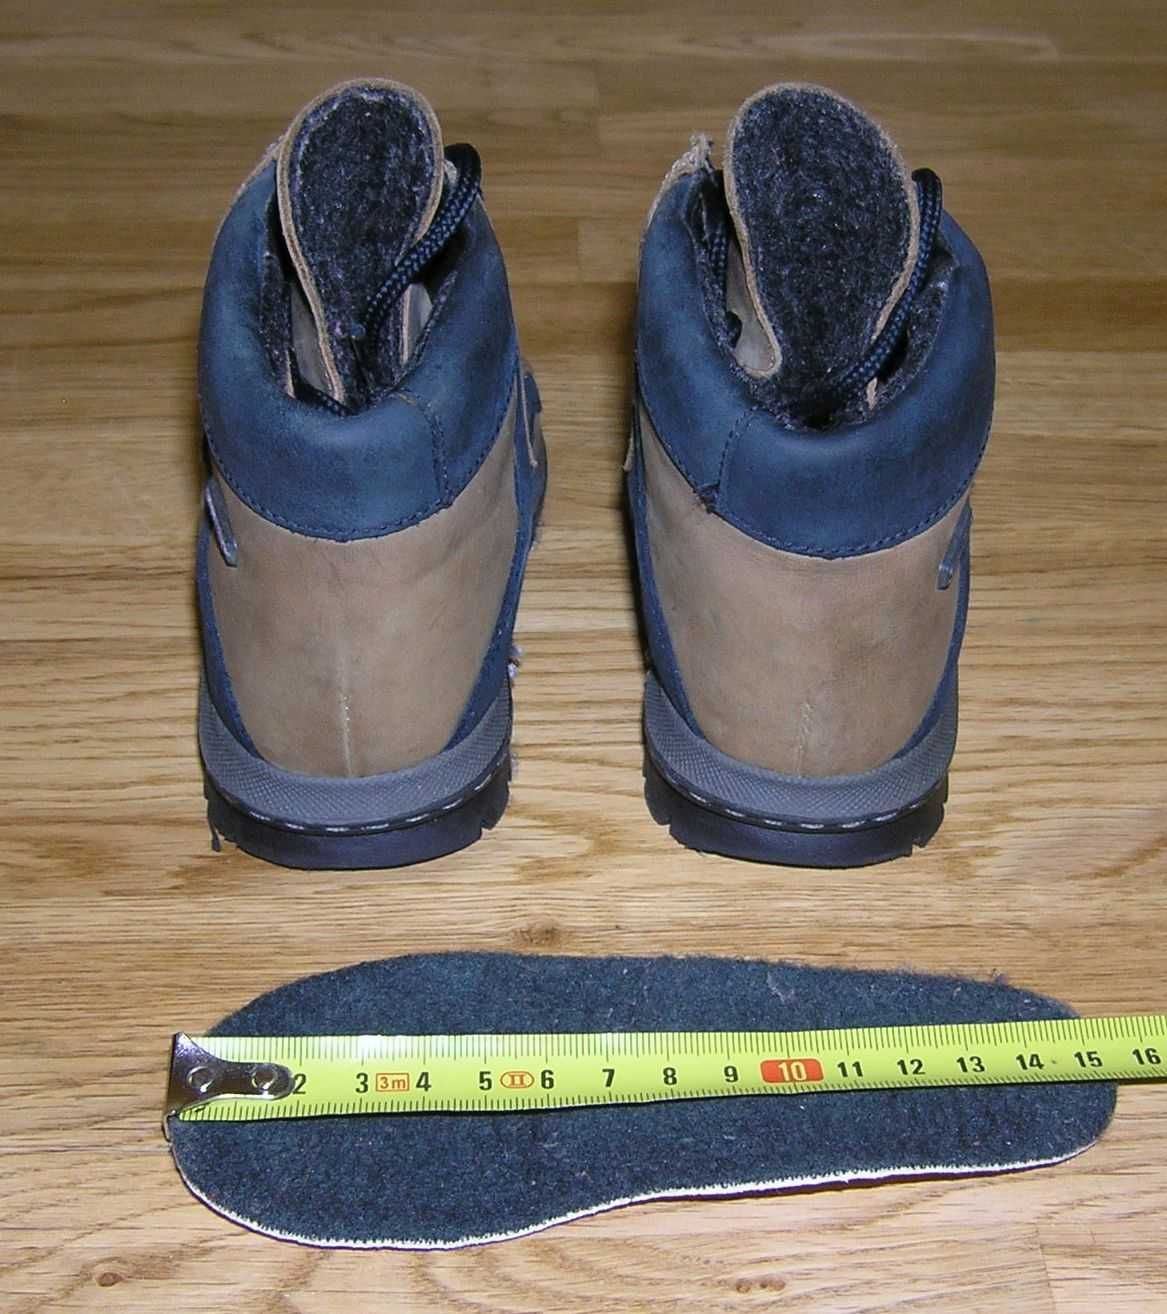 Solidne buty dziecięce Lurchi Salamander r. 25 - wkł. 15,5 cm, nubuk